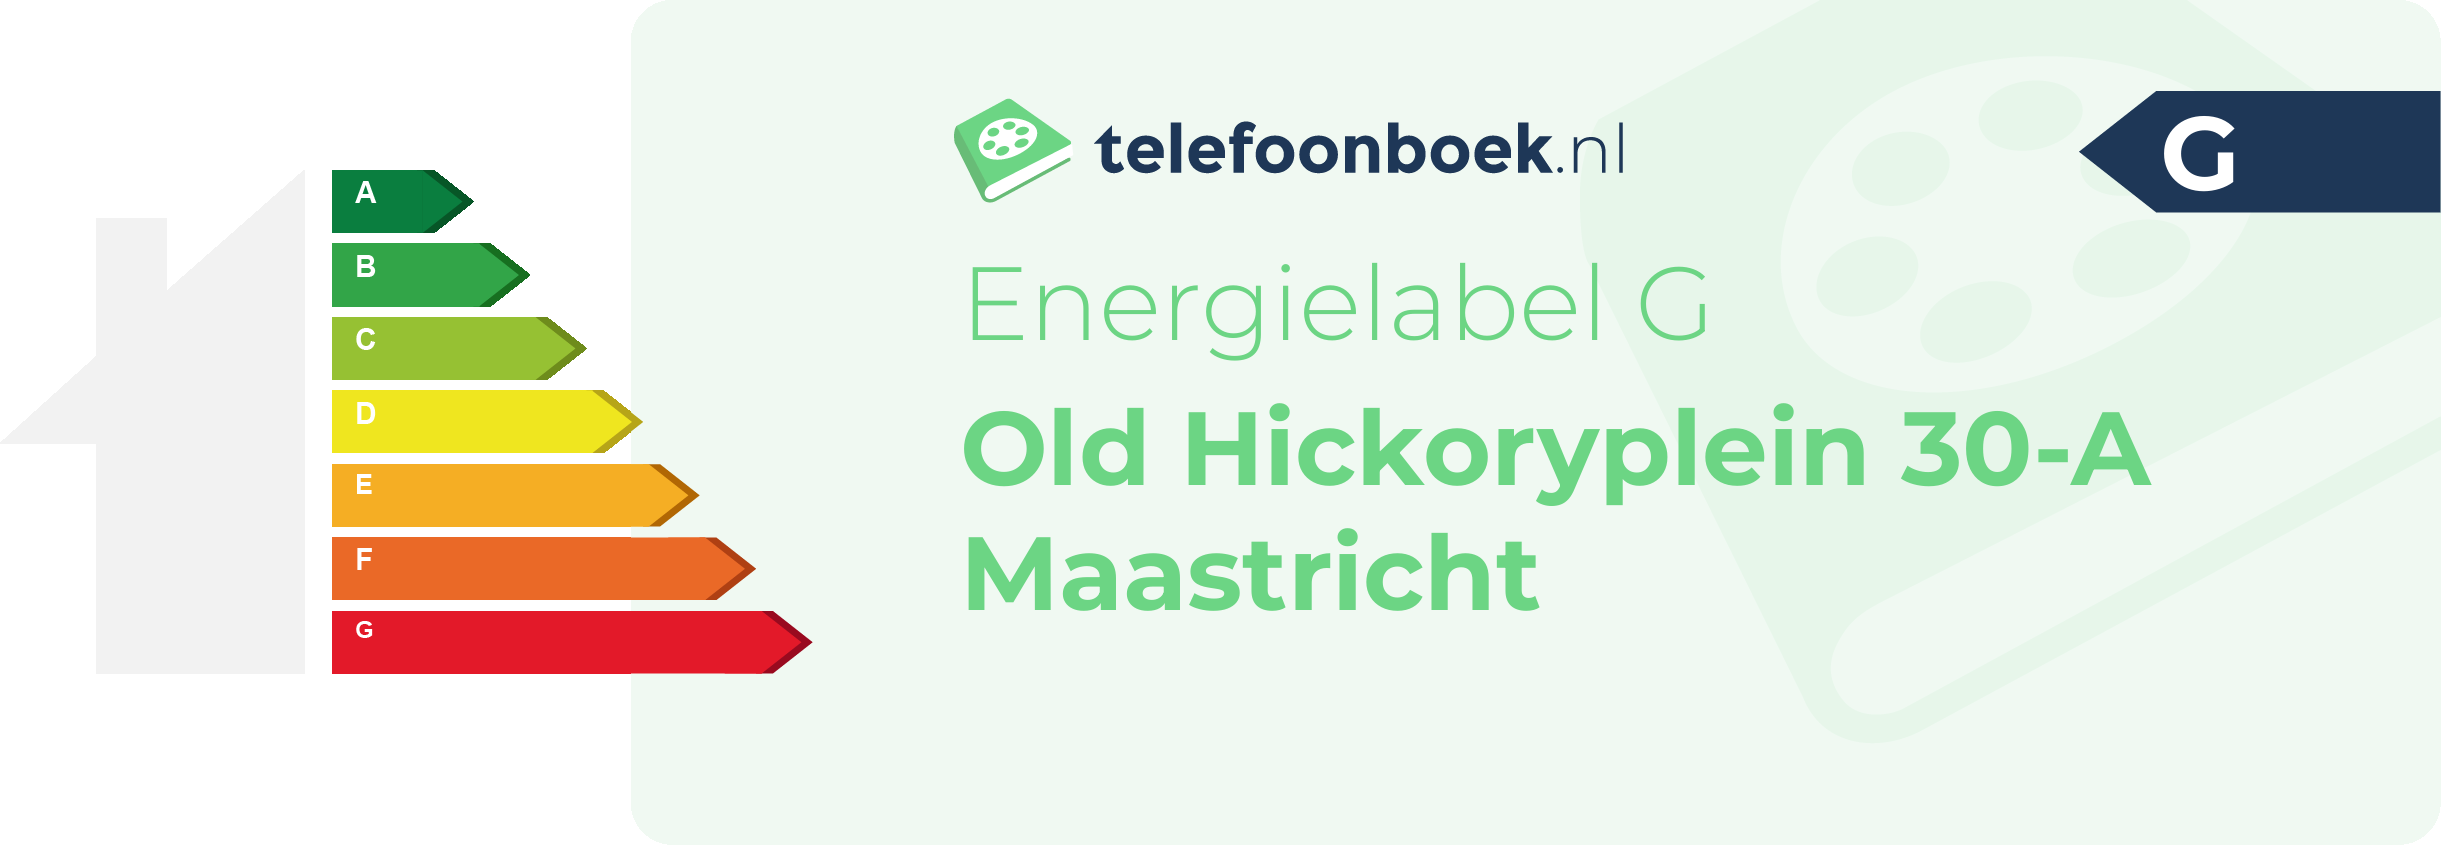 Energielabel Old Hickoryplein 30-A Maastricht